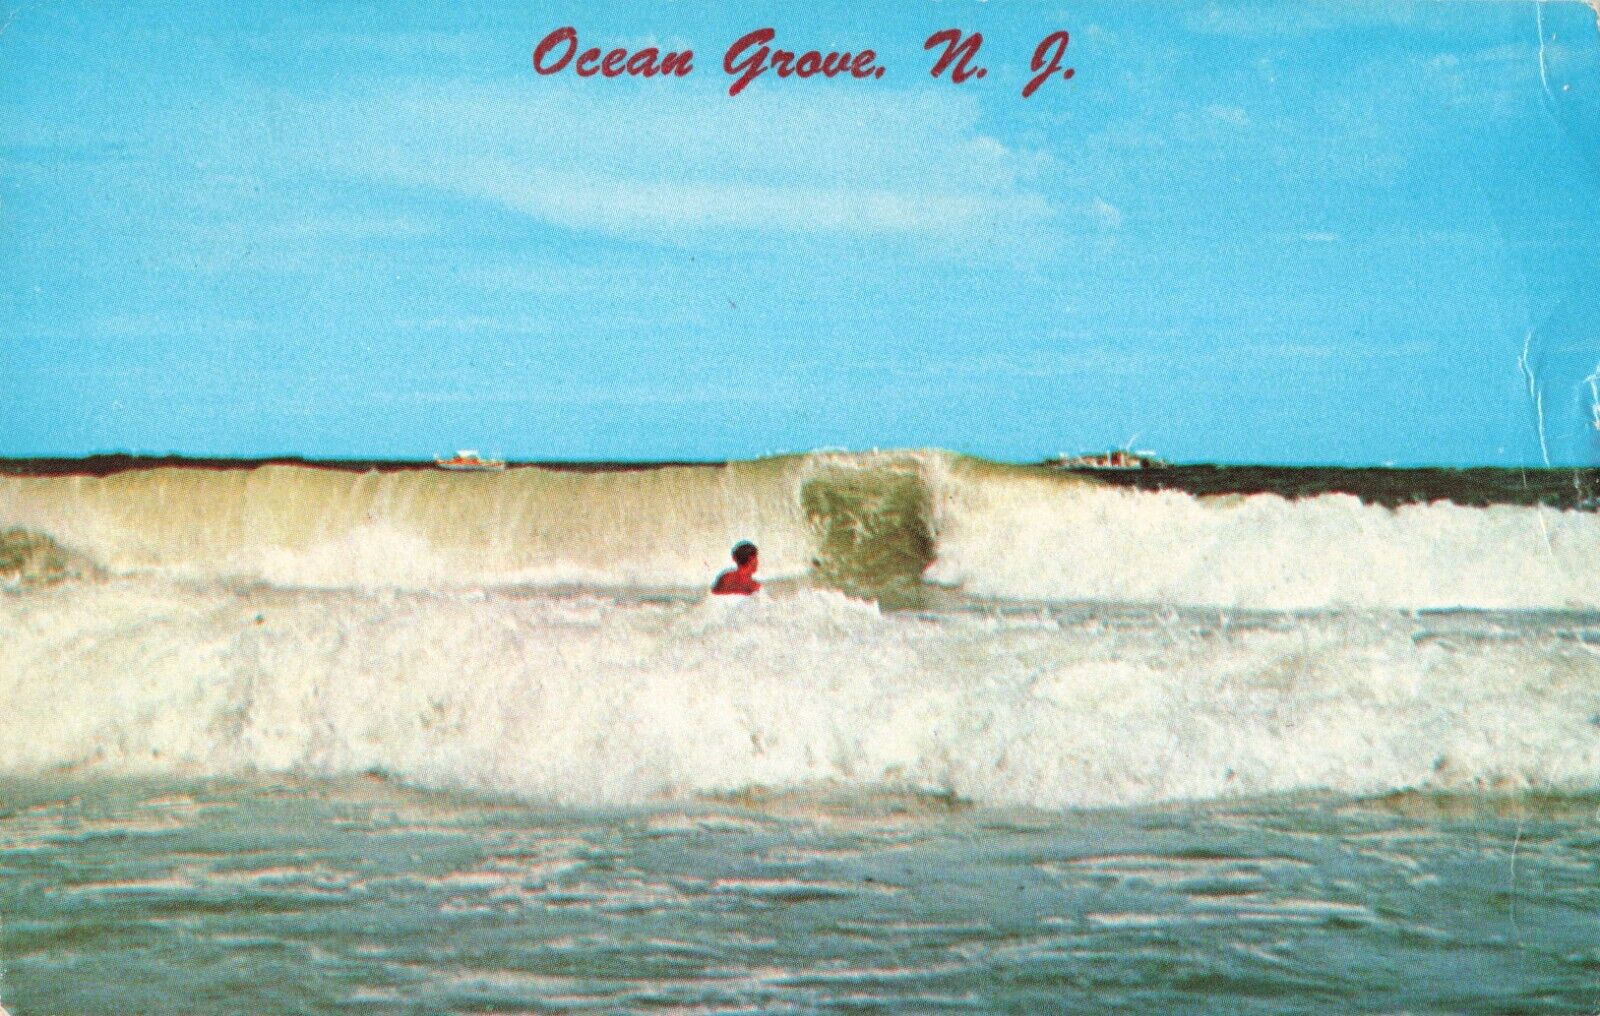 Ocean Grove NJ, Rolling Heavy Surf, Atlantic, Boats, Surfer, Vintage Postcard